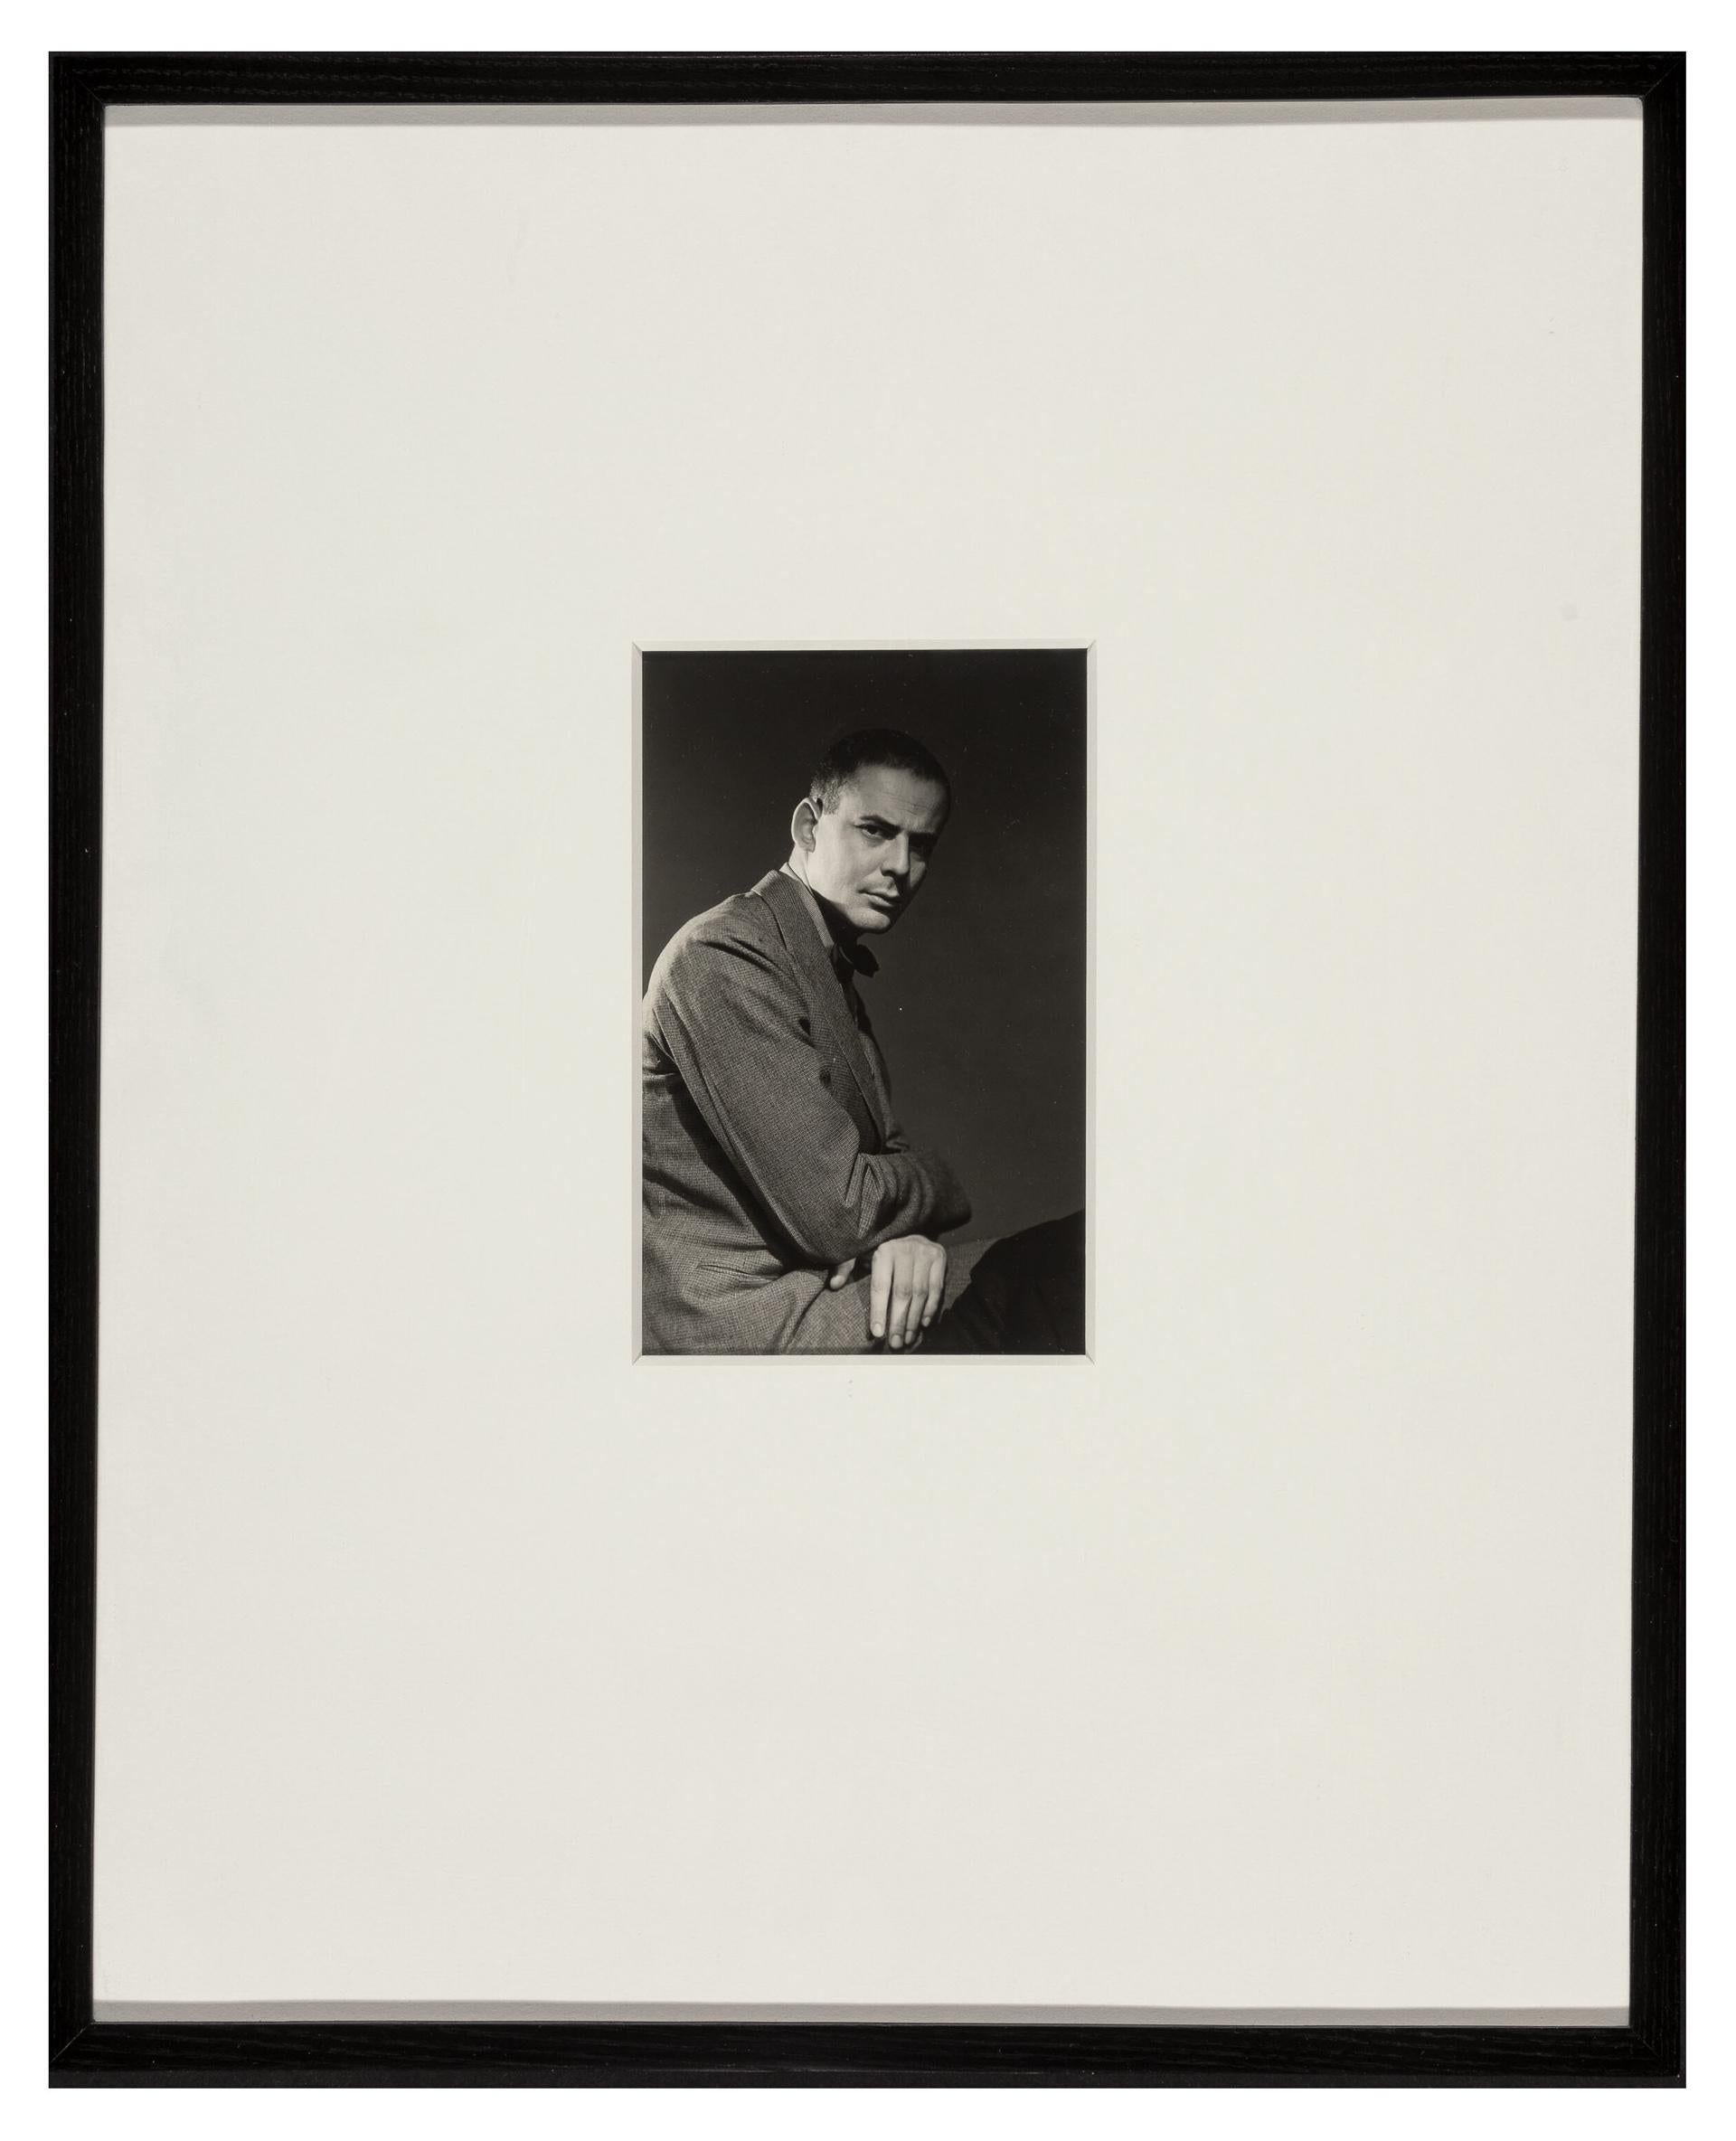 Portrait of Lincoln Kirstein - Photograph by George Platt Lynes